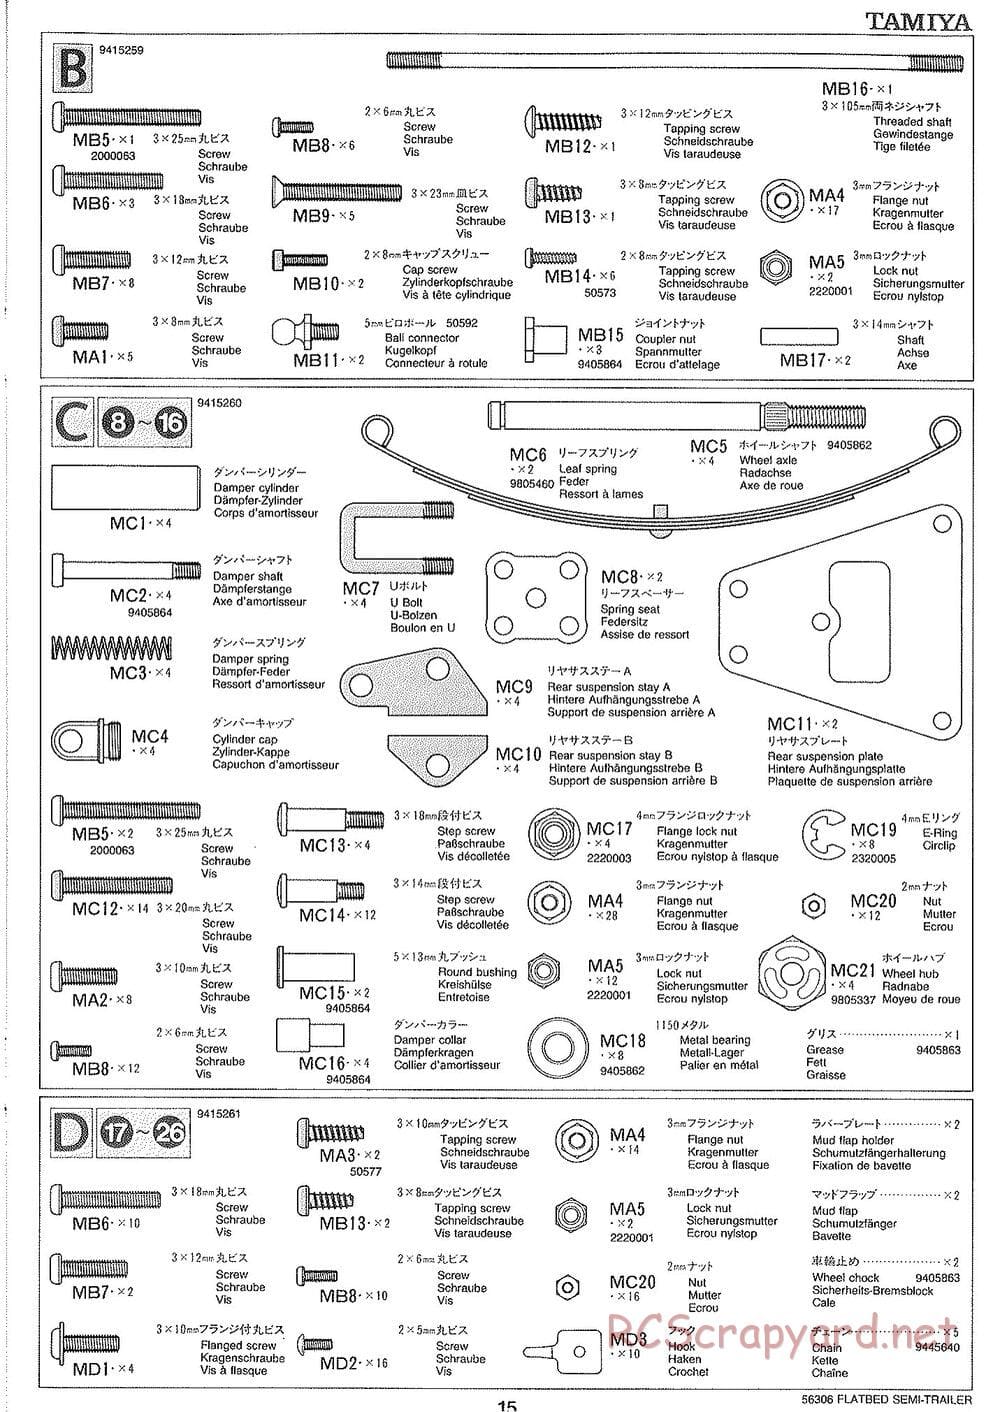 Tamiya - Semi Flatbed Trailer Chassis - Manual - Page 15